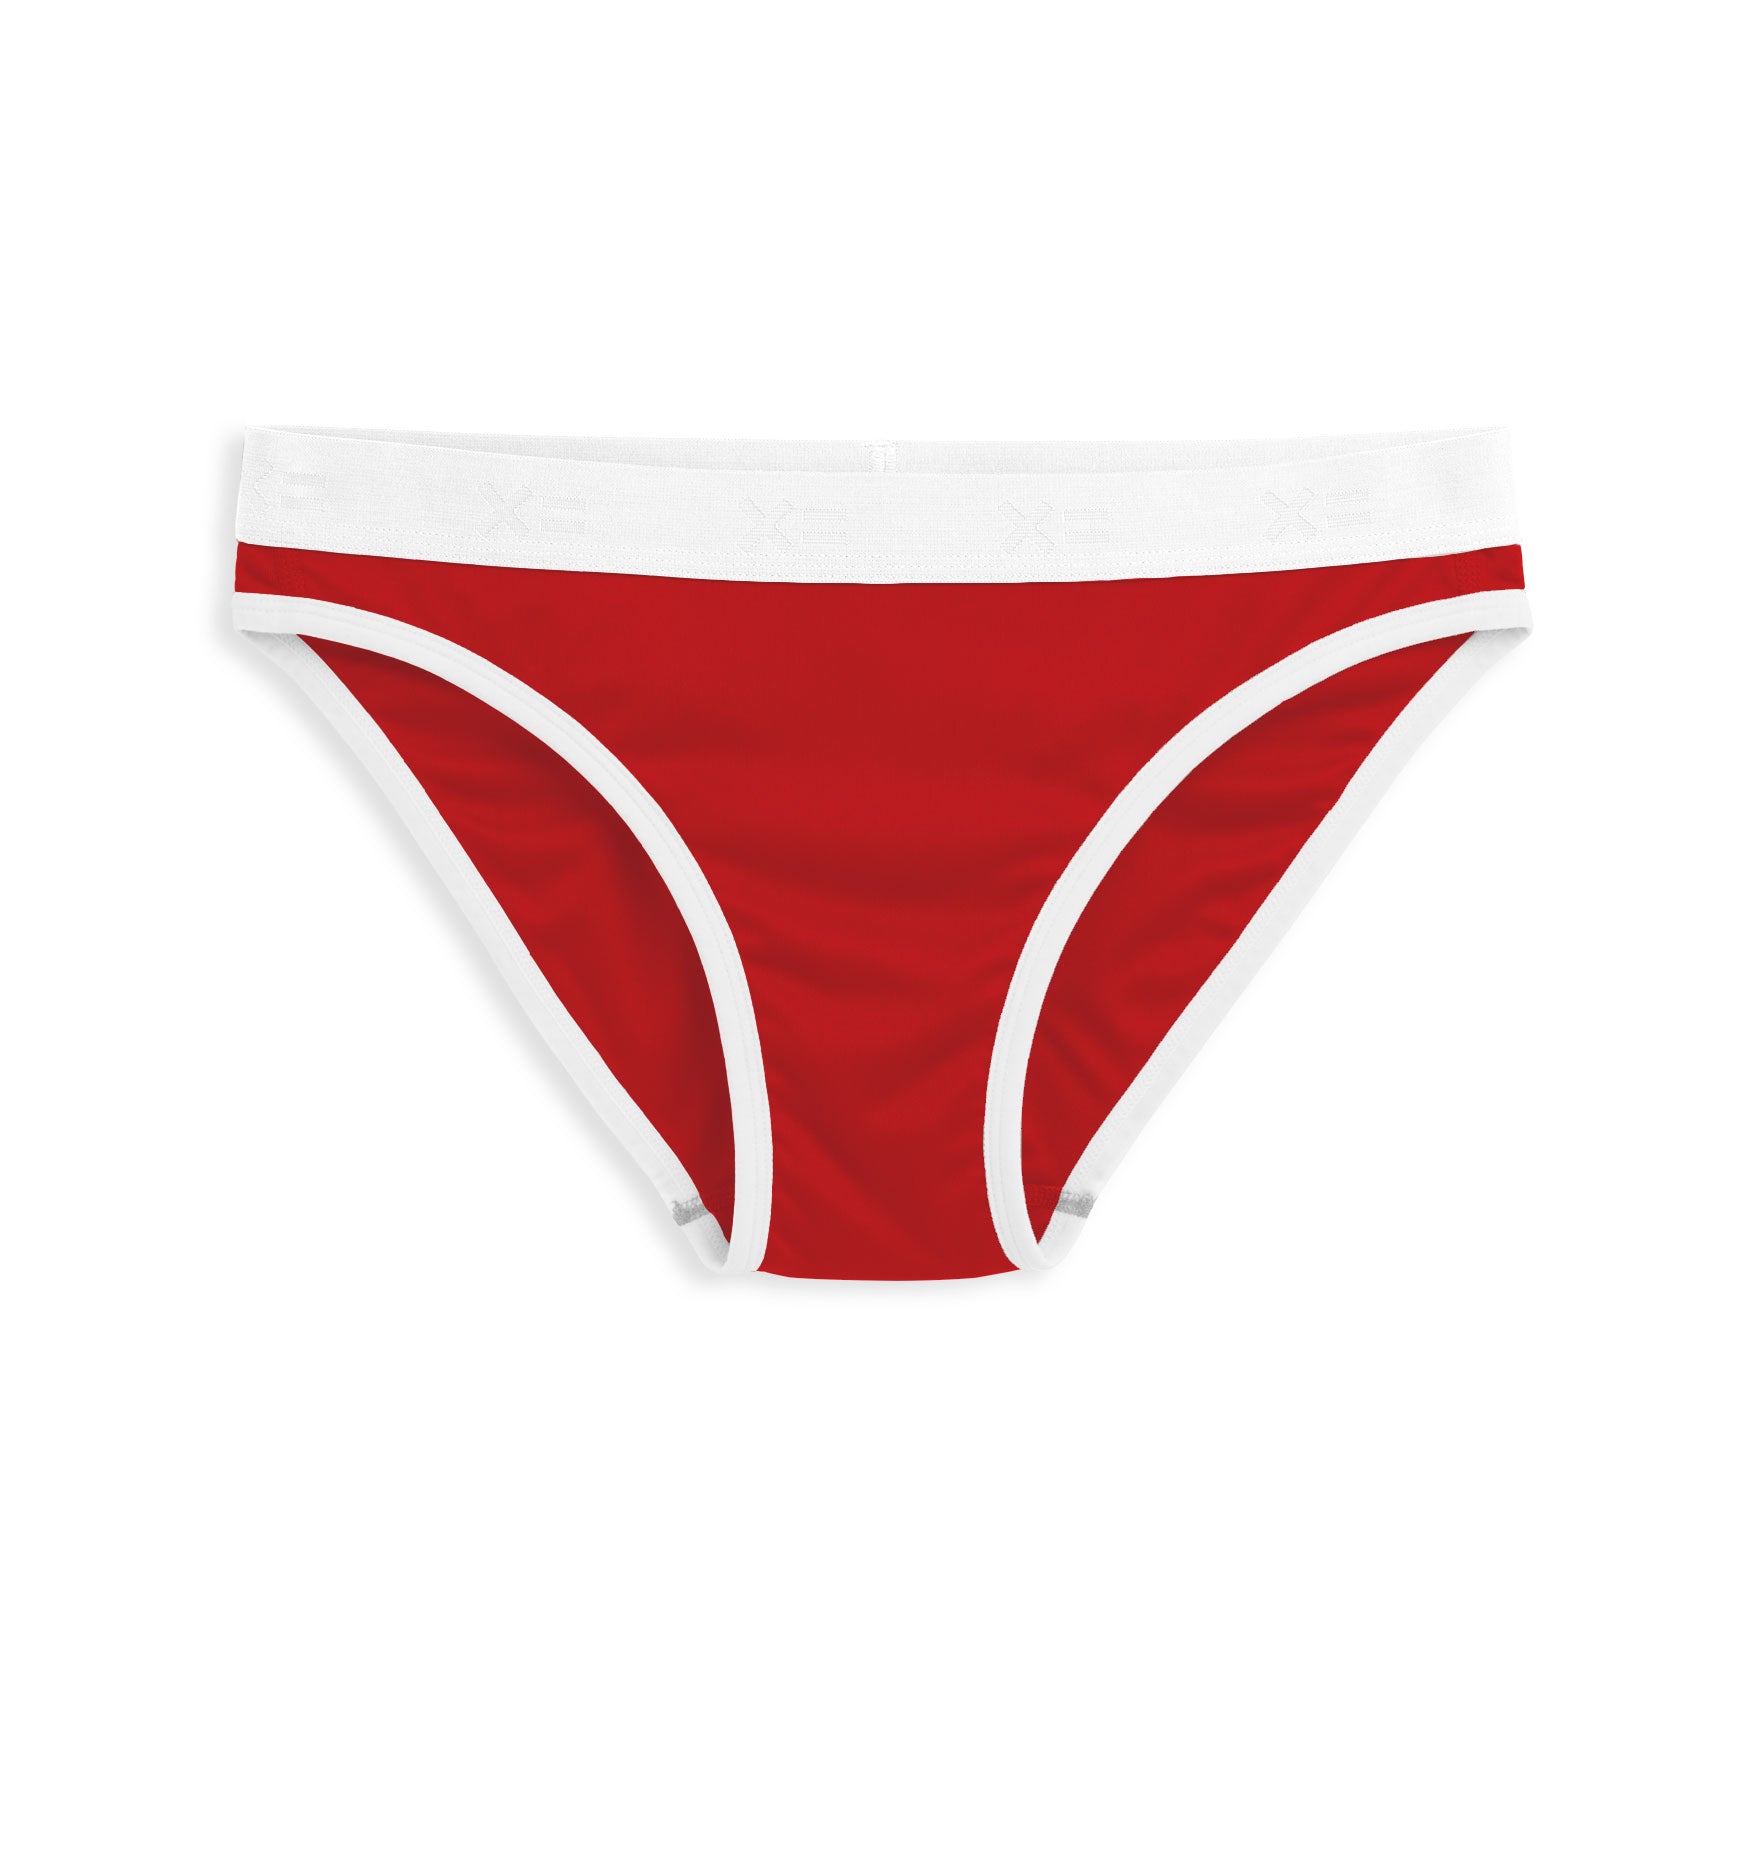 Tomboyx Women's First Line Period Leakproof Bikini Underwear, Cotton  Stretch Comfortable (3XS-6X) Sugar Violet XX Large